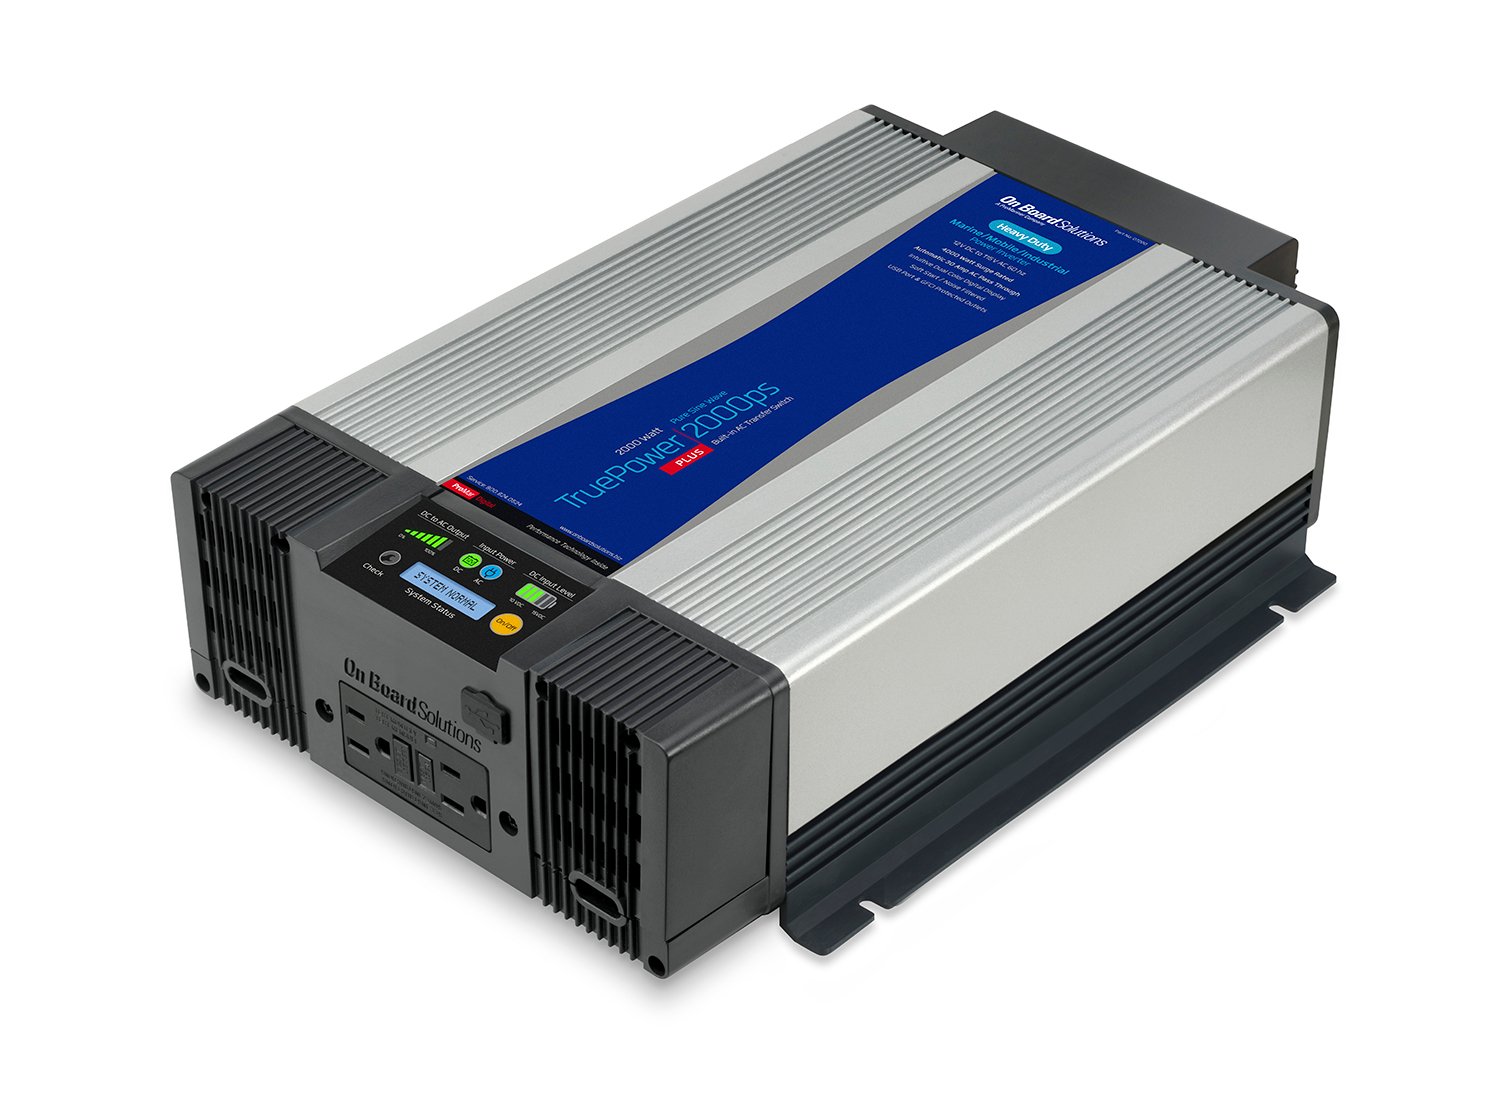 Xplorer 2000W Pure Sine Wave Power Inverter with USB & Remote